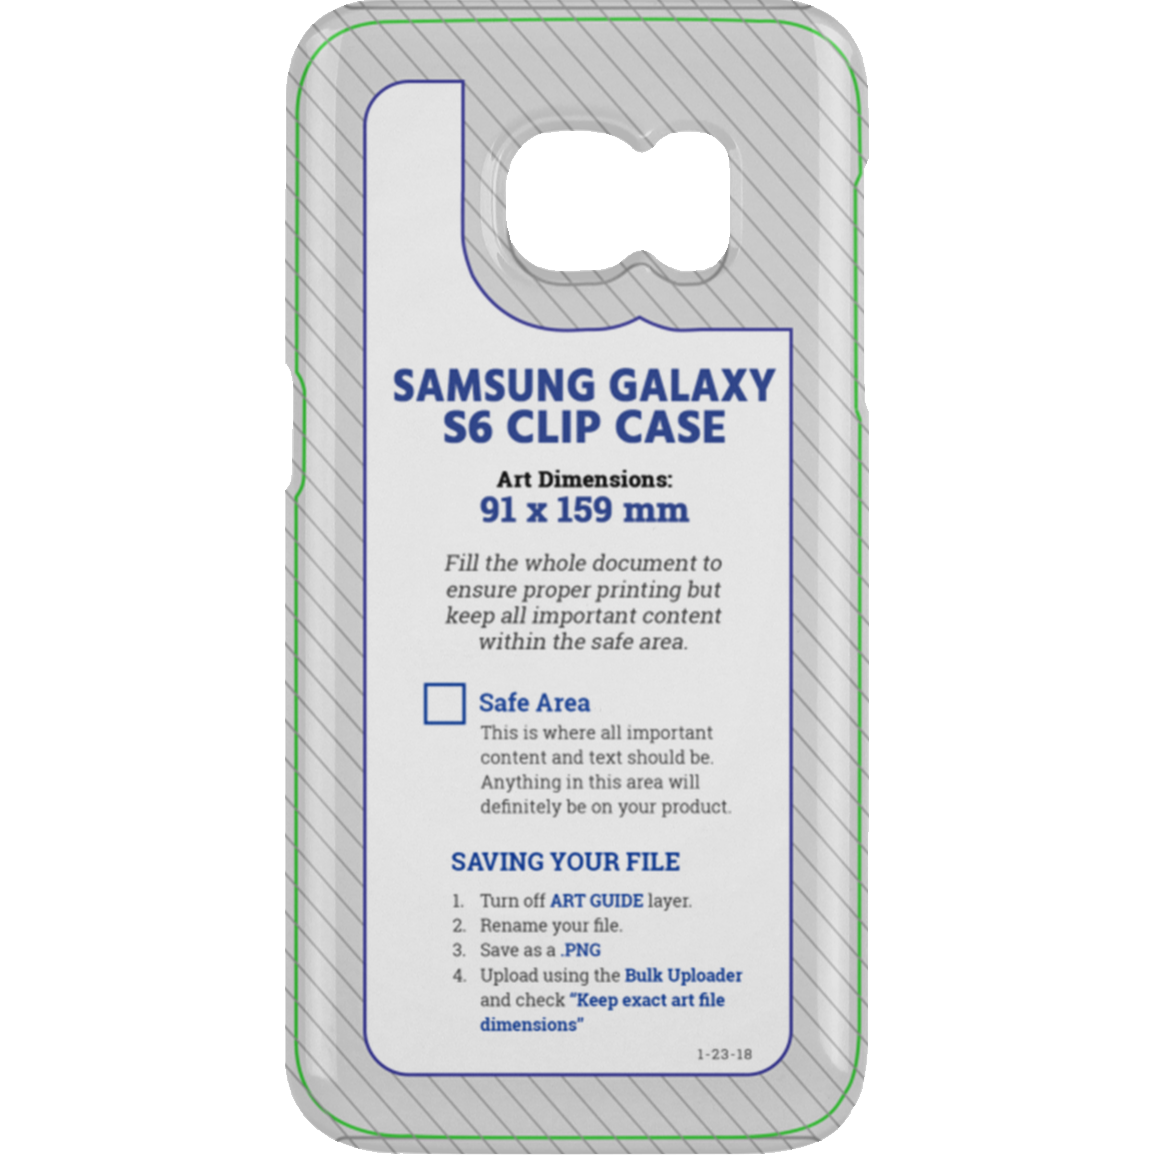 Samsung Galaxy S6 Clip